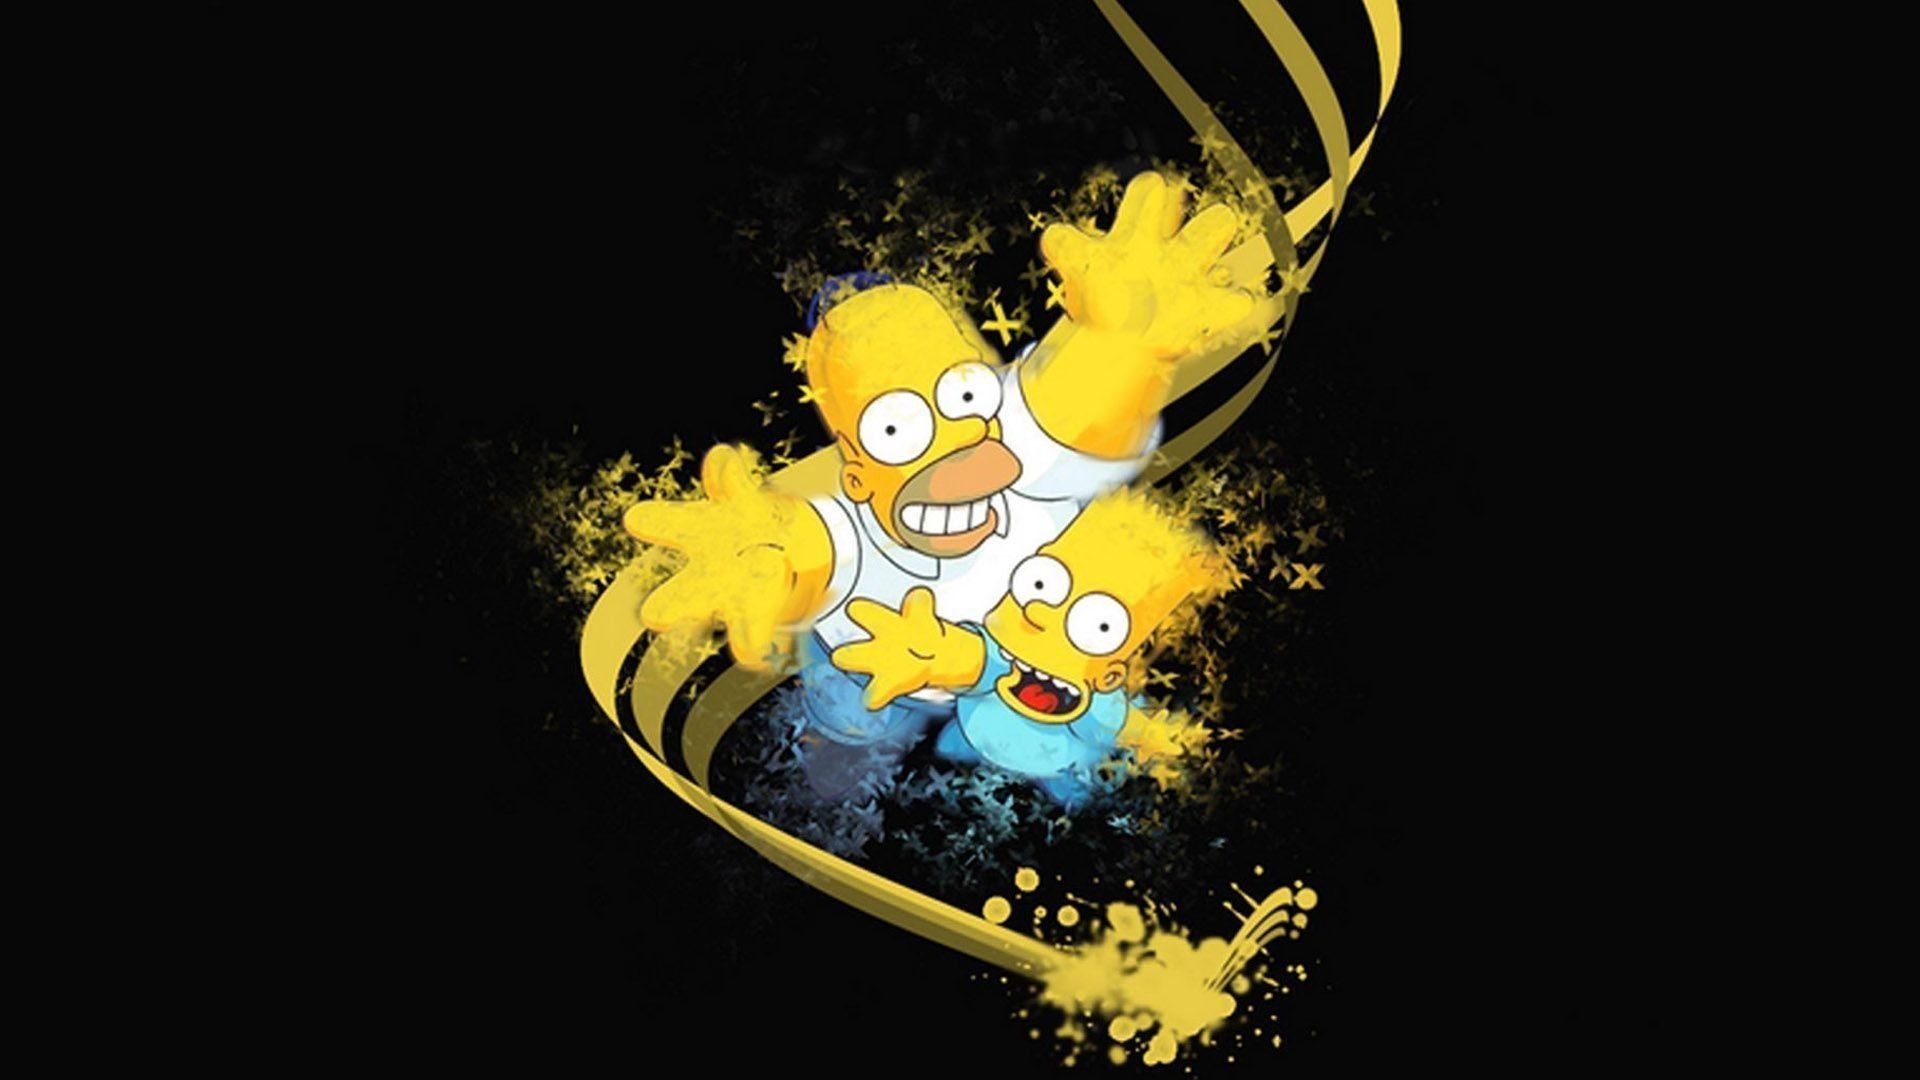 Homer Simpson wallpaper, Homer Simpson, The Simpsons, black background, yellow paint, 1920x1080 wallpaper - Bart Simpson